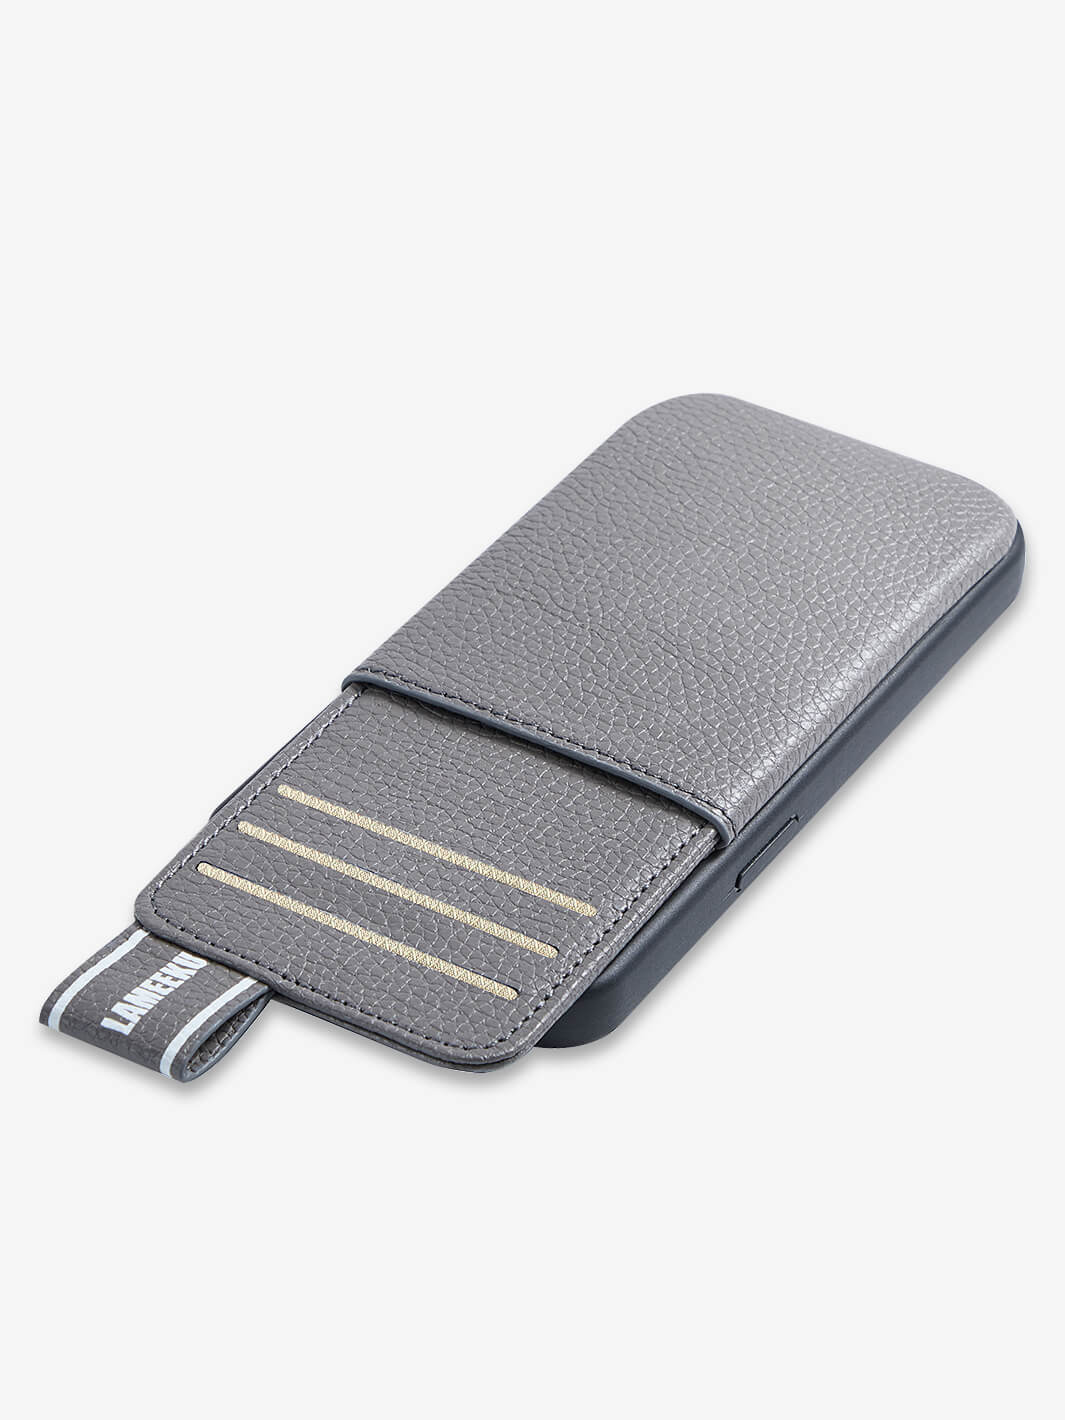 Custype phone case phone cover in gray